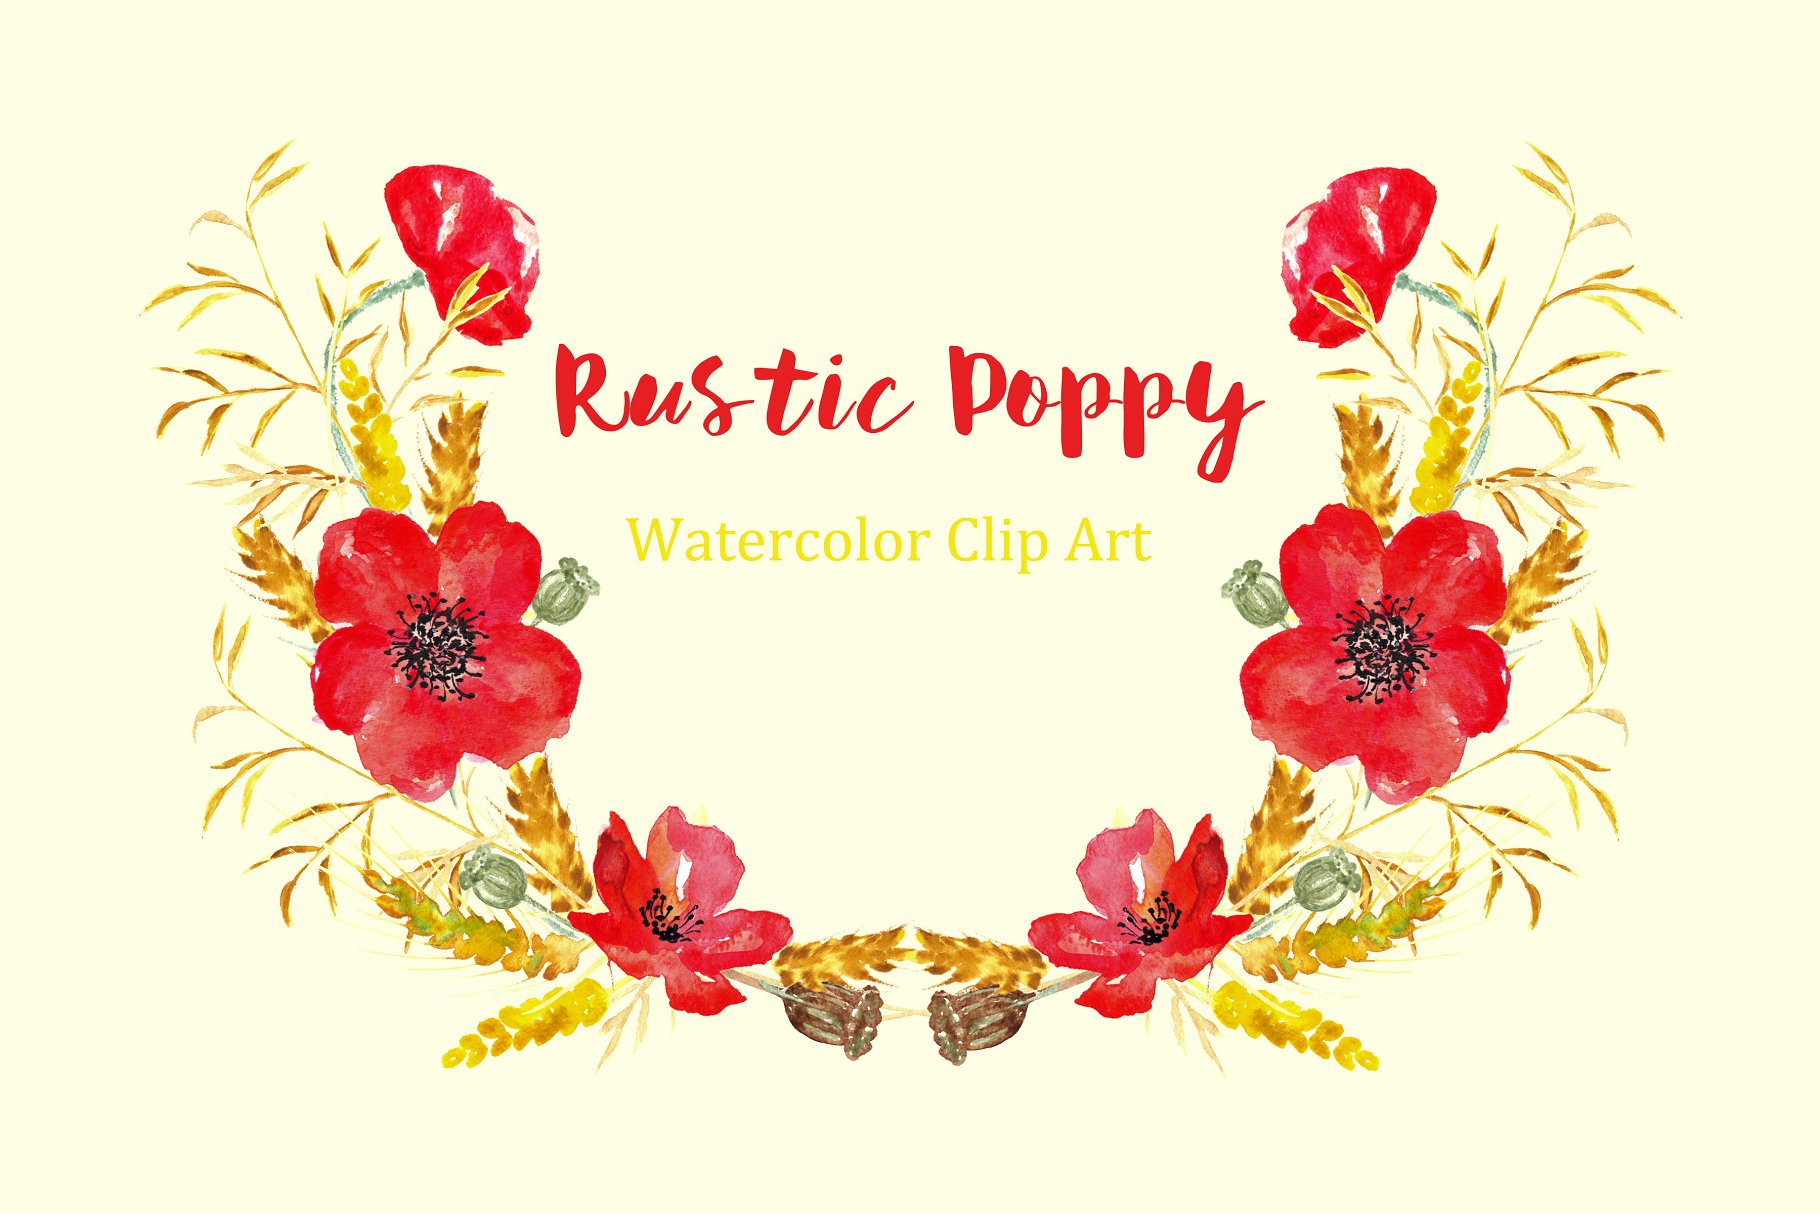 夏季乡村浪漫罂粟剪贴画 Ructic Poppy watercolor Clipart插图(1)